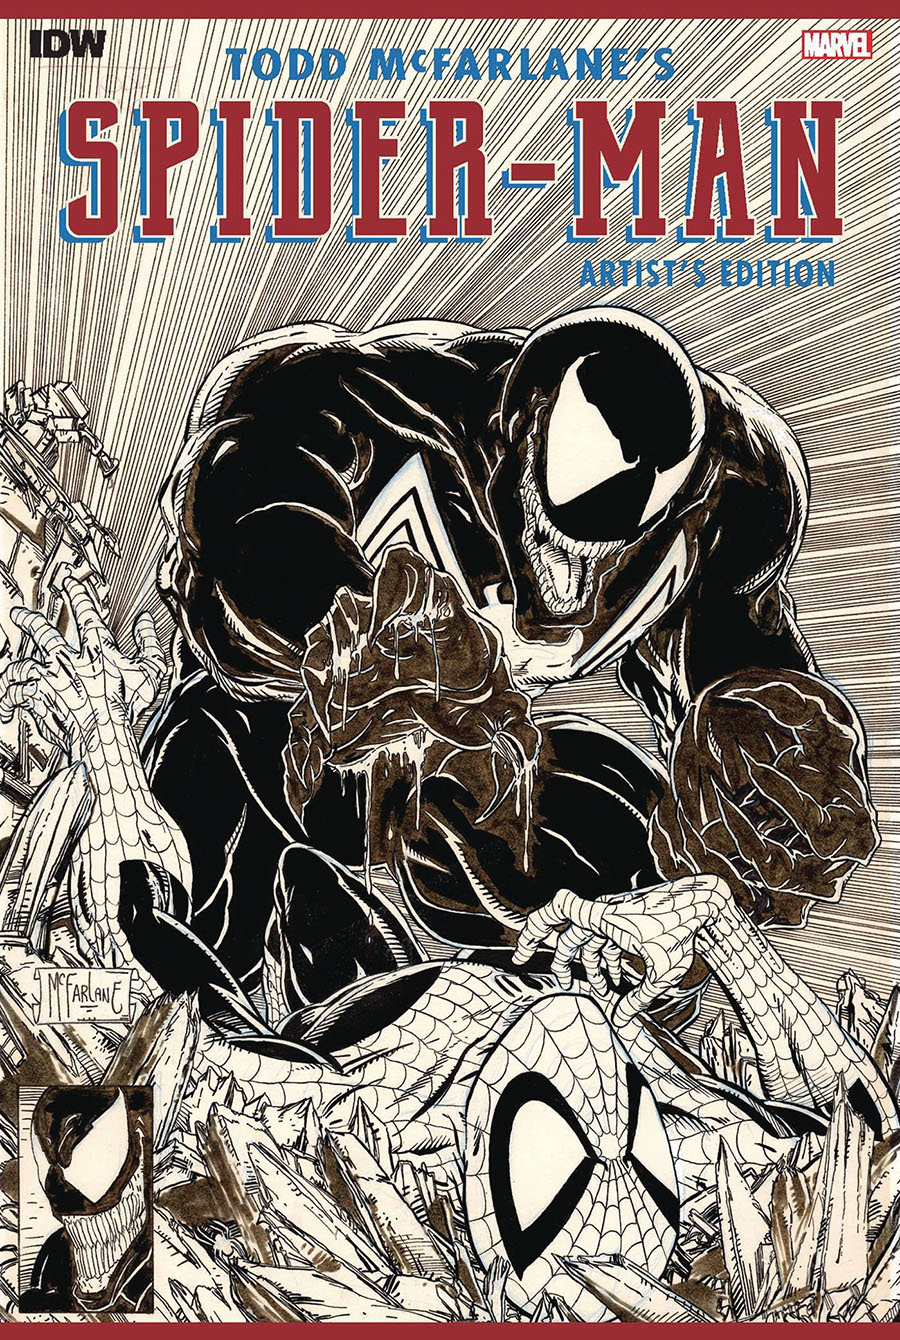 Todd McFarlanes Spider-Man Artists Edition HC